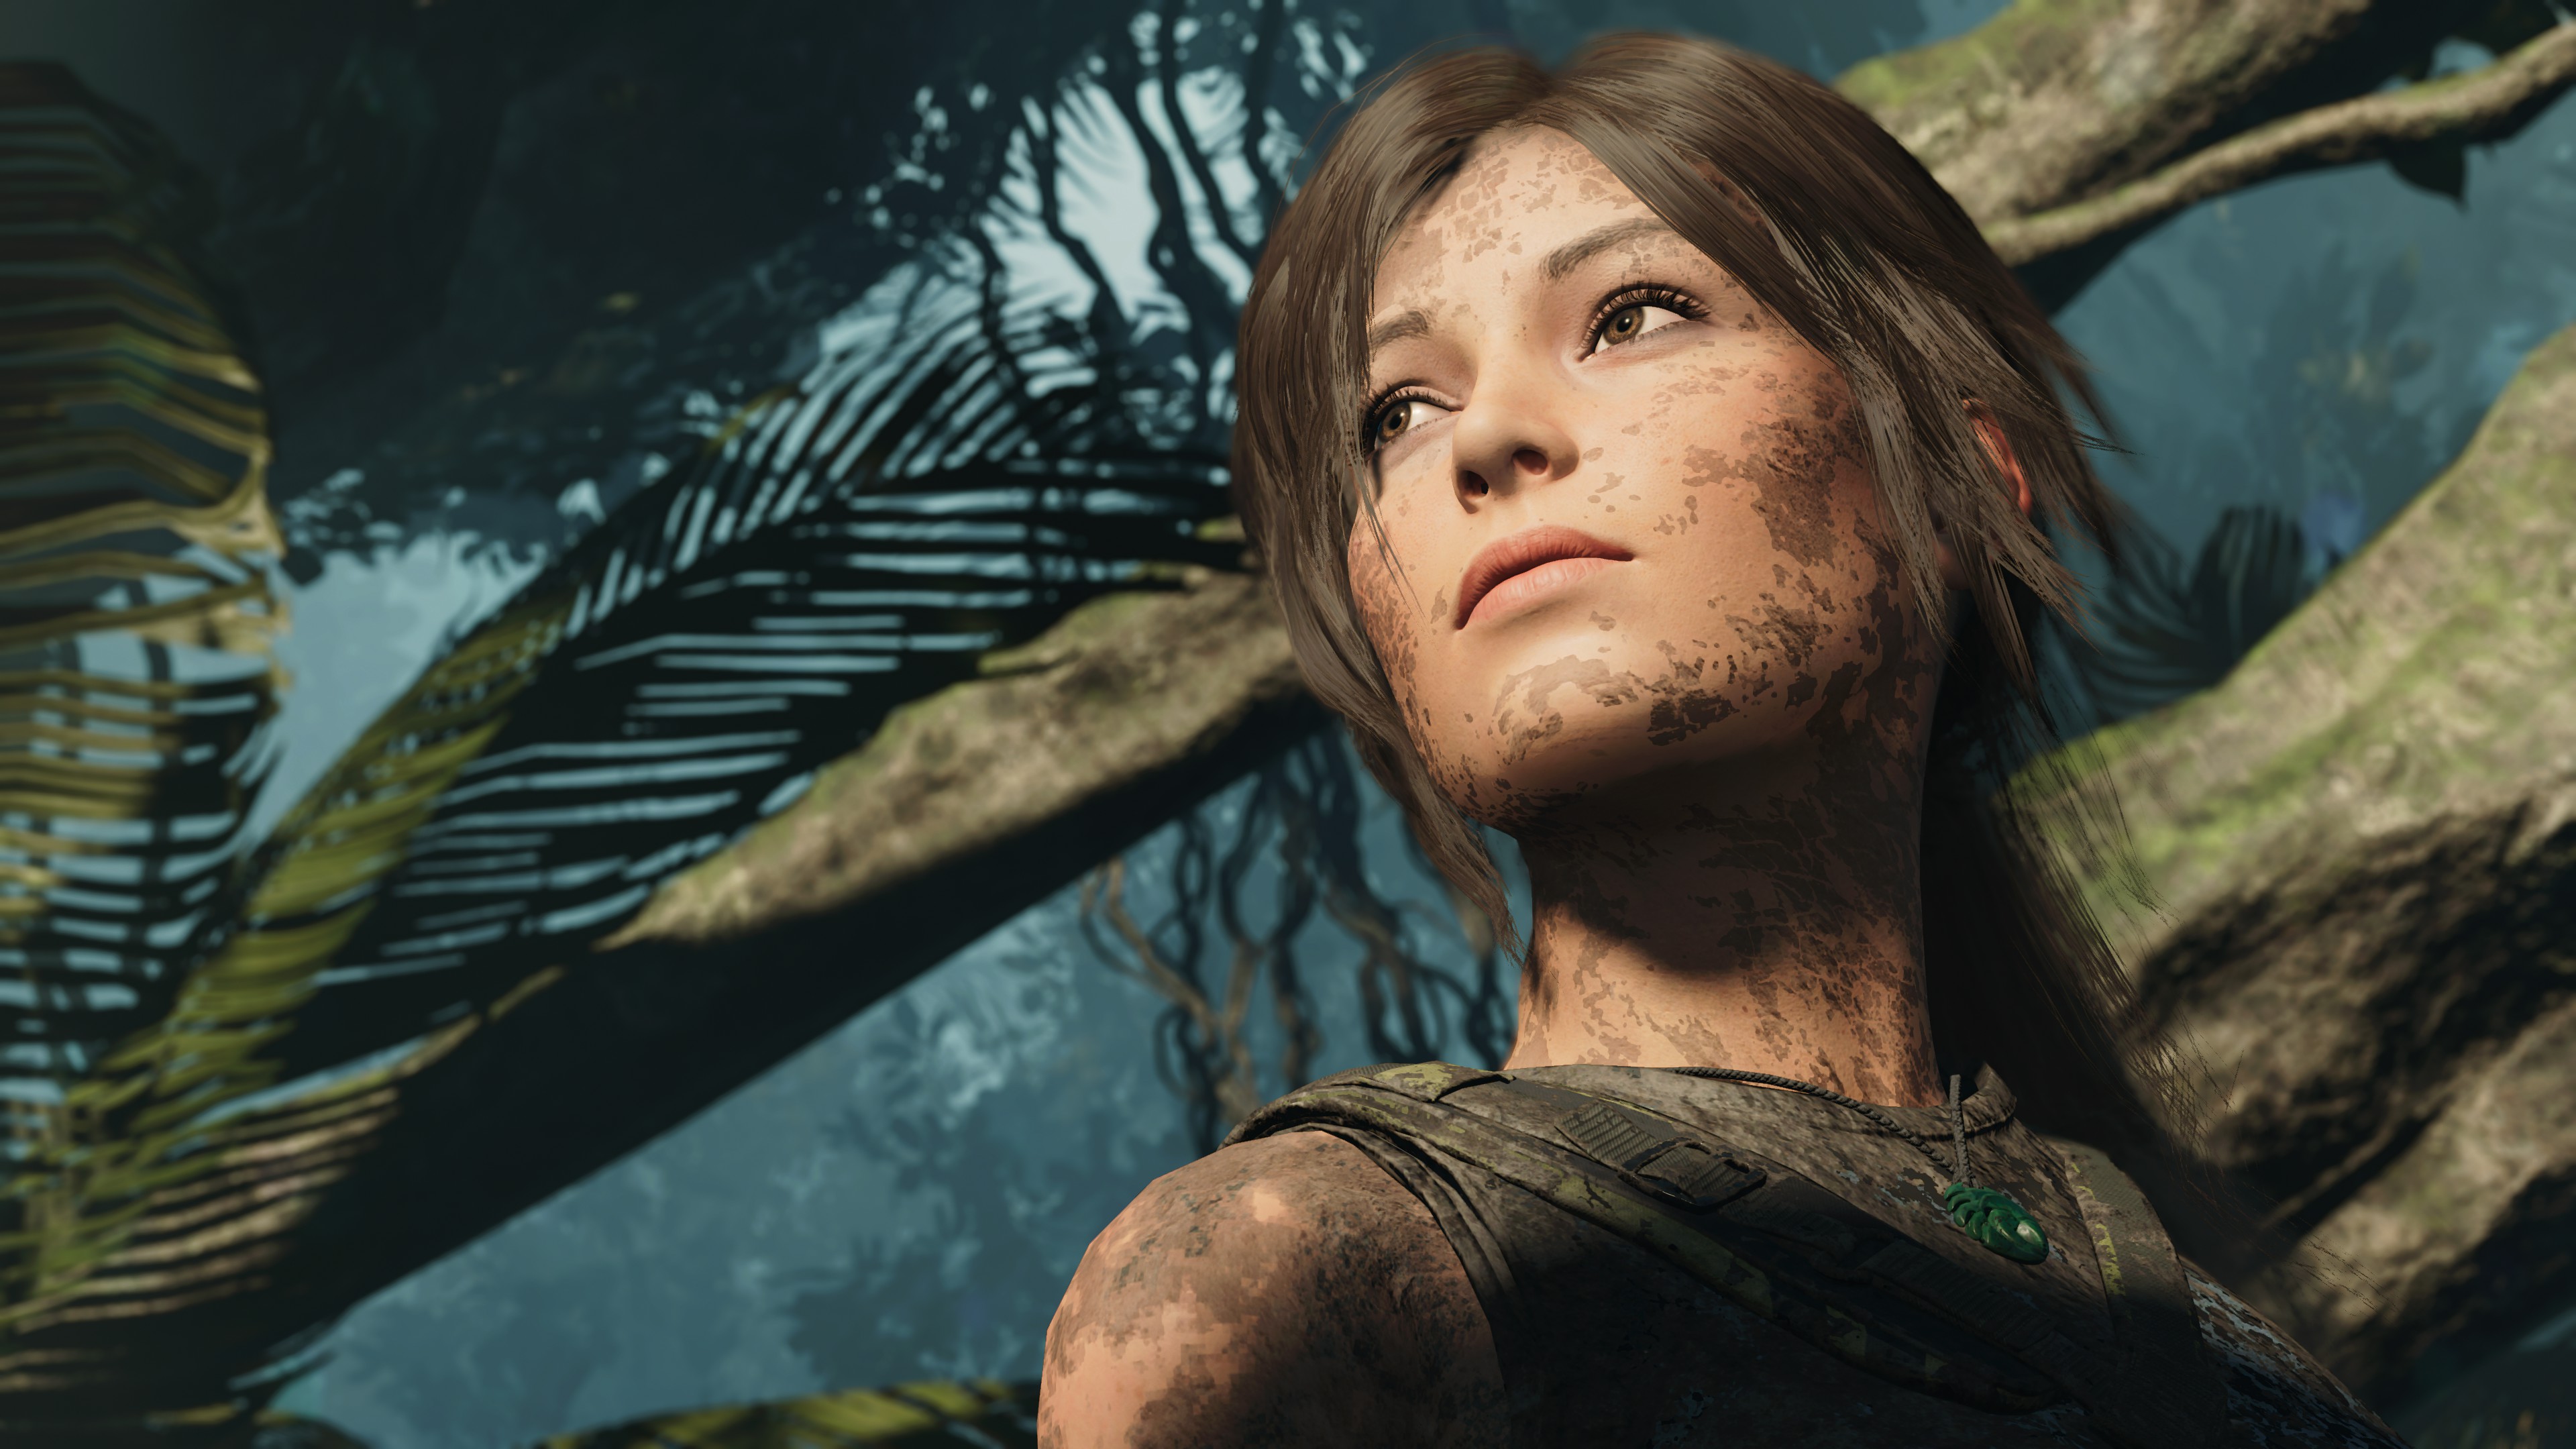 Райдер игра 2018. Tomb Raider 2018 игра. Lara Croft Shadow of the Tomb Raider. Мир Shadow of the Tomb Raider.